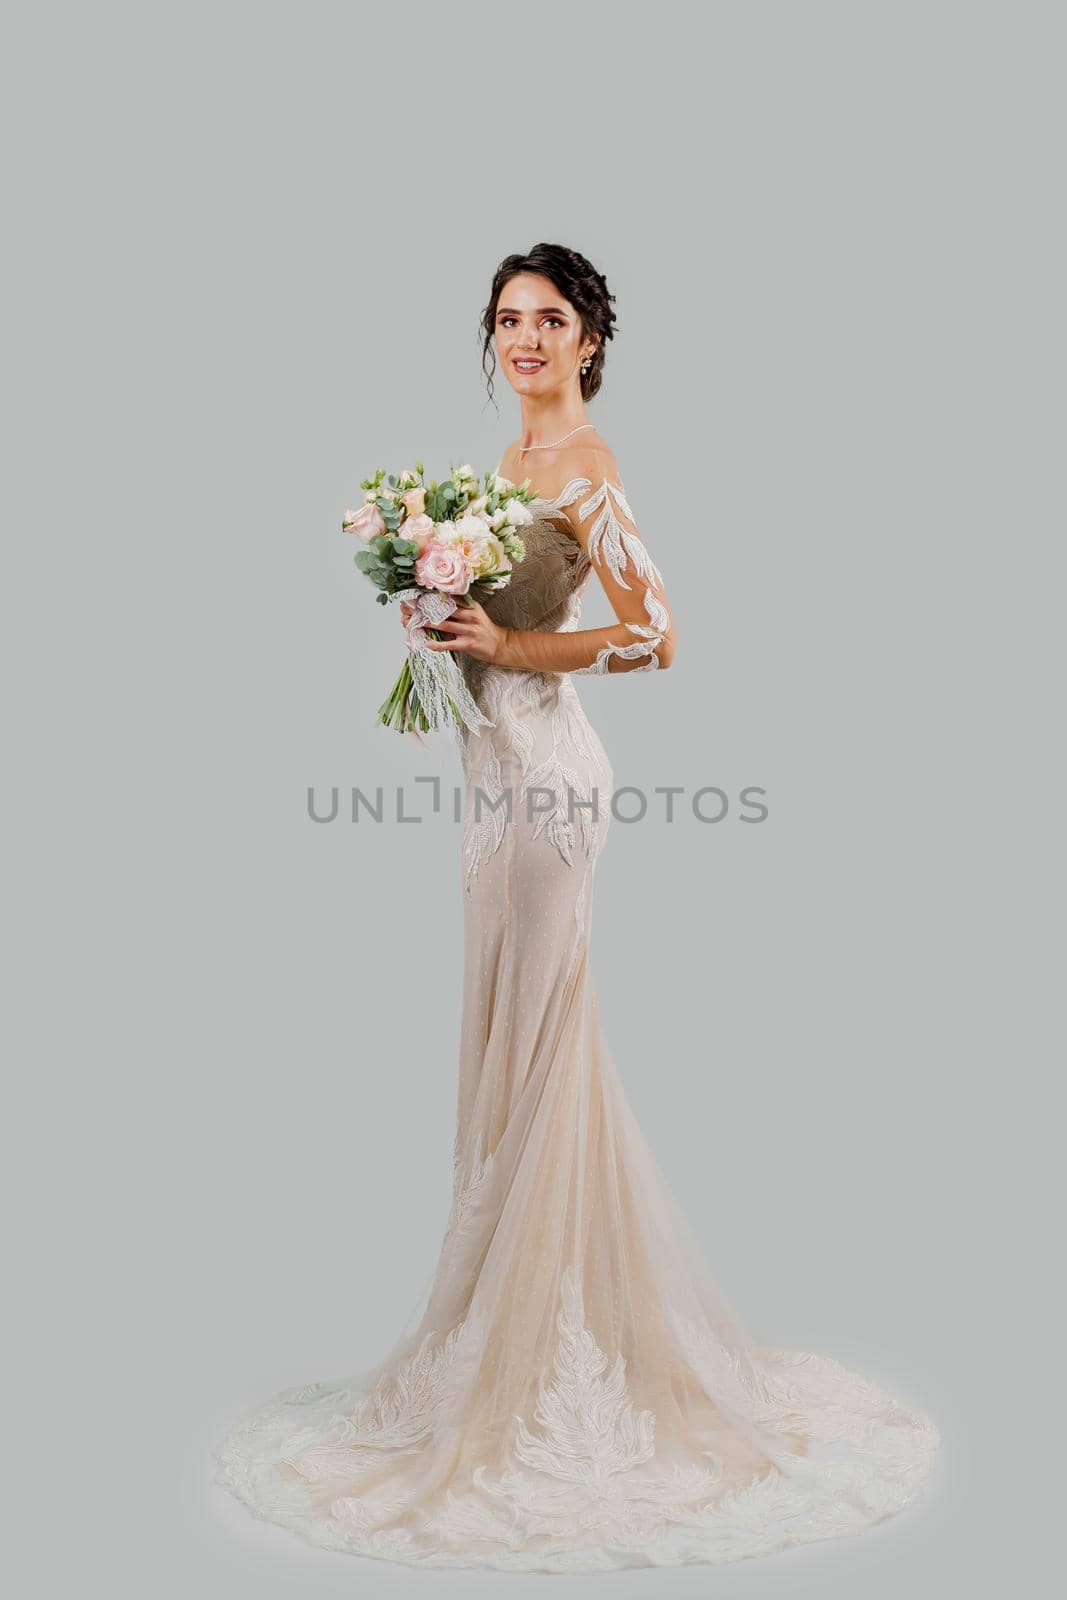 Girl in wedding dress on white blank background. Bride in white wedding dress with bouquet in studio. by Rabizo